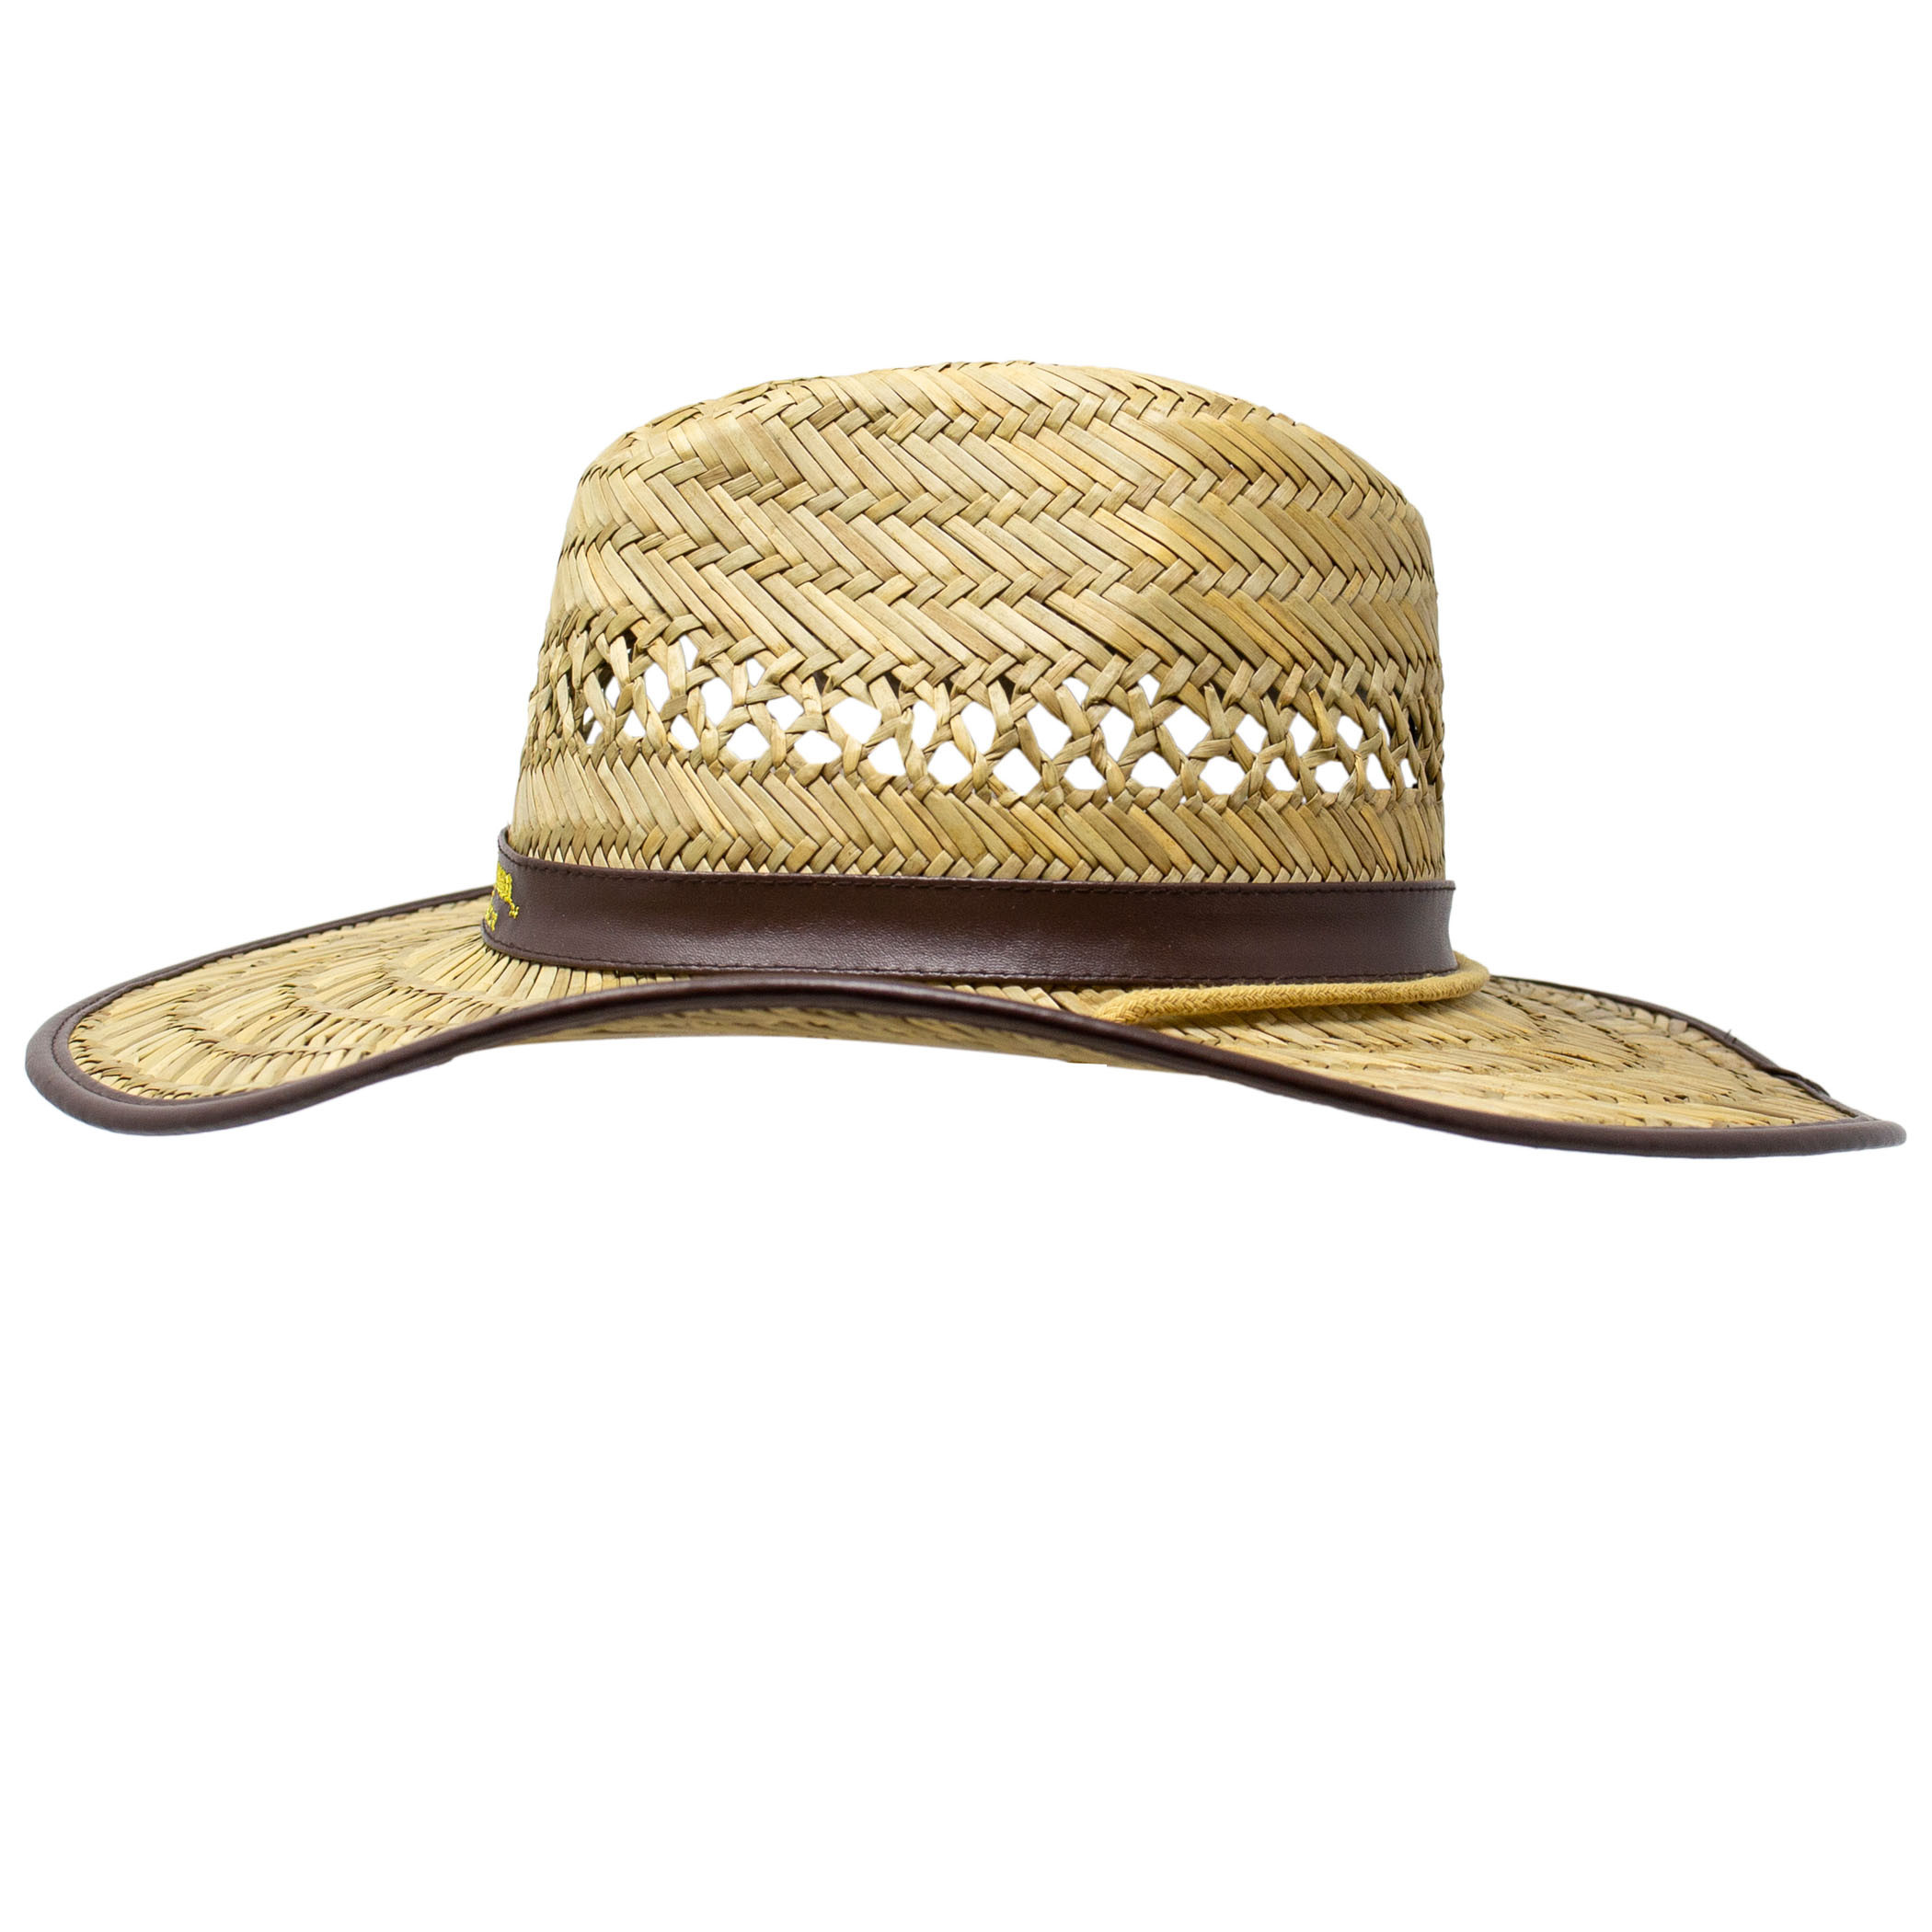 Corona Extra Straw Lifeguards Hat